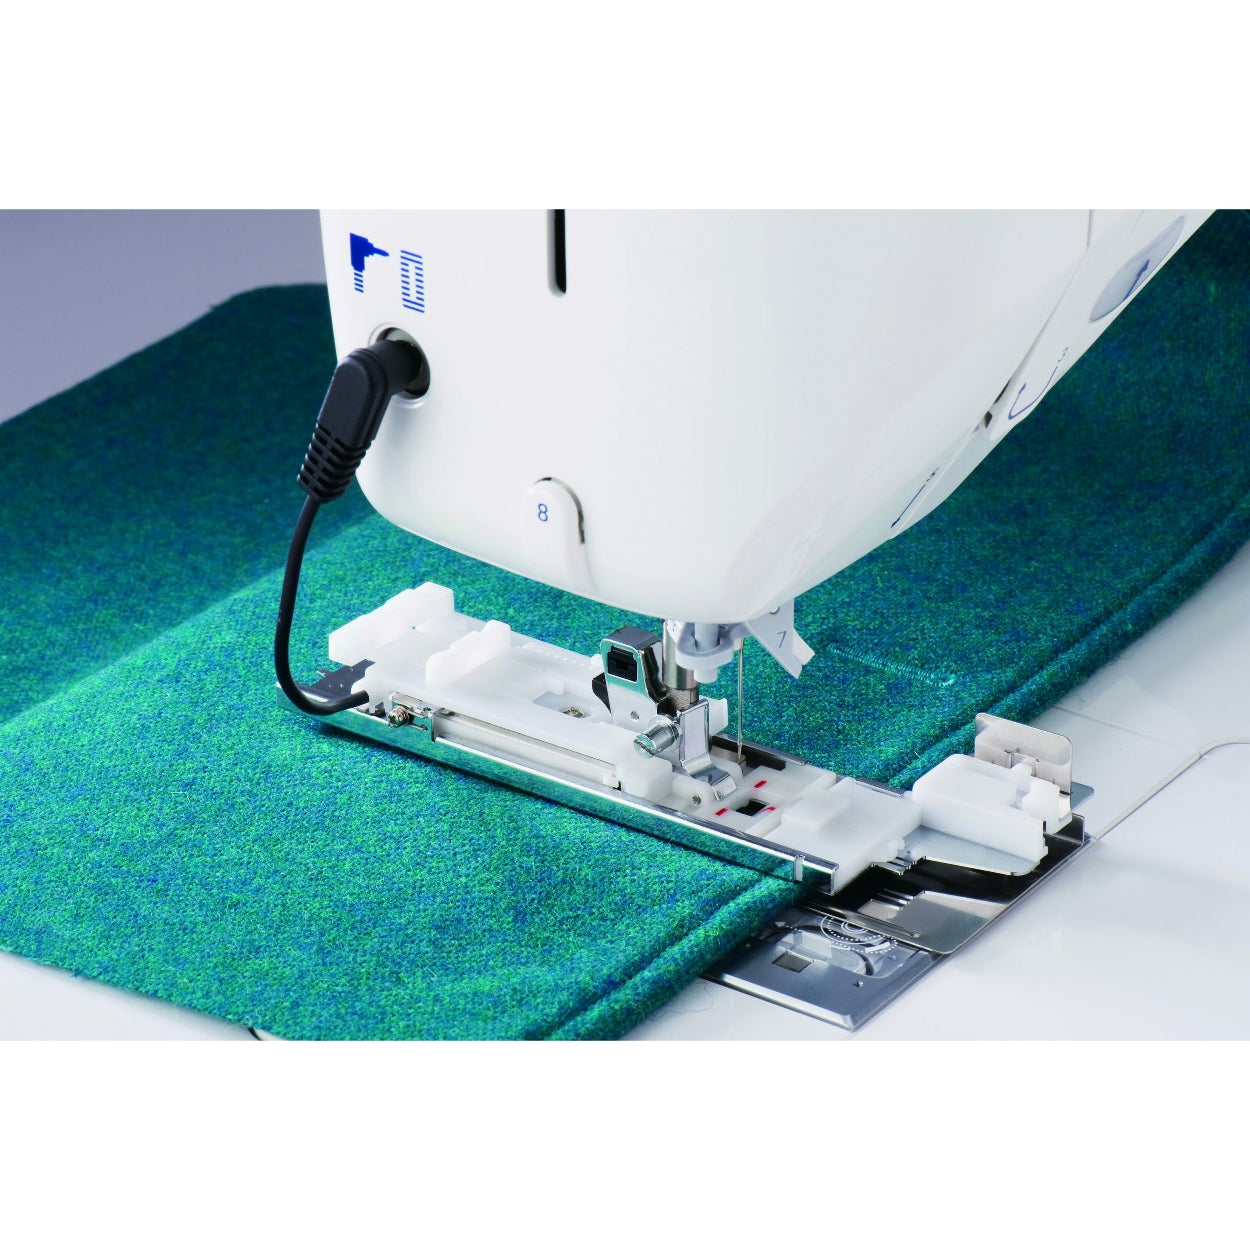 Juki UX8 Sewing Machine from Jaycotts Sewing Supplies